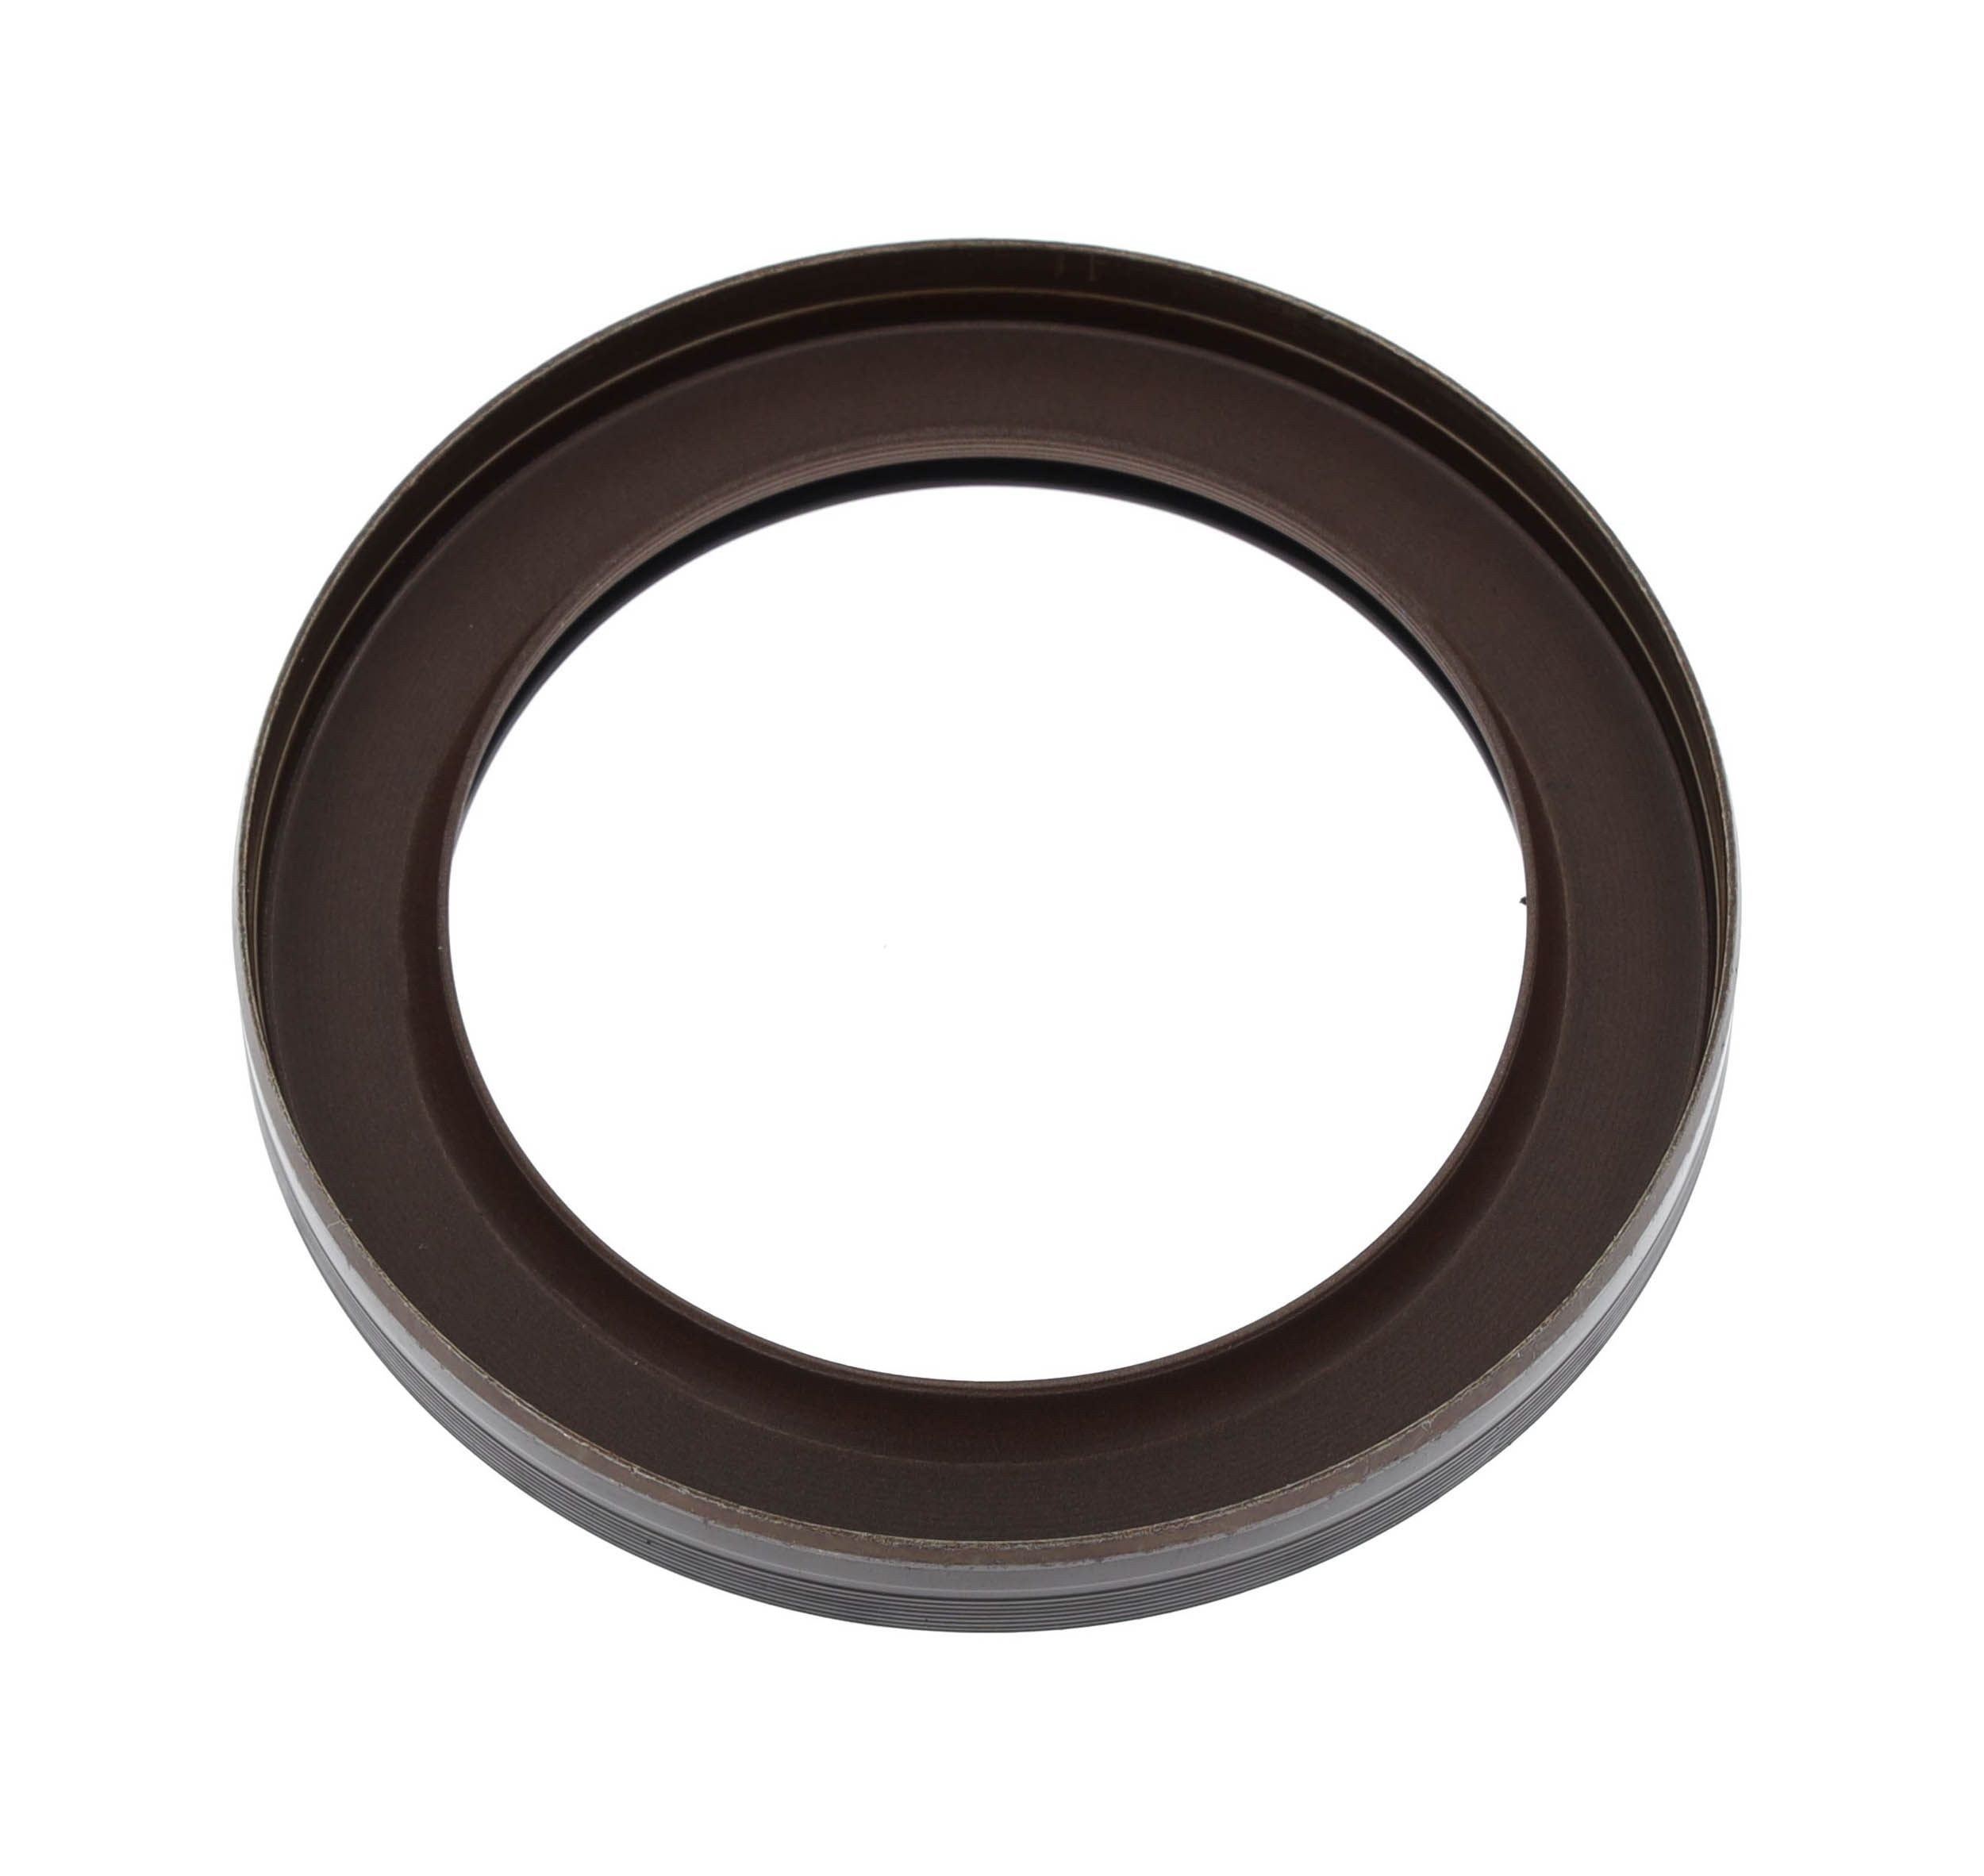 CORTECO 15027677B Crankshaft seal with mounting sleeves, frontal sided, PTFE (polytetrafluoroethylene)/ACM (polyacrylate rubber)